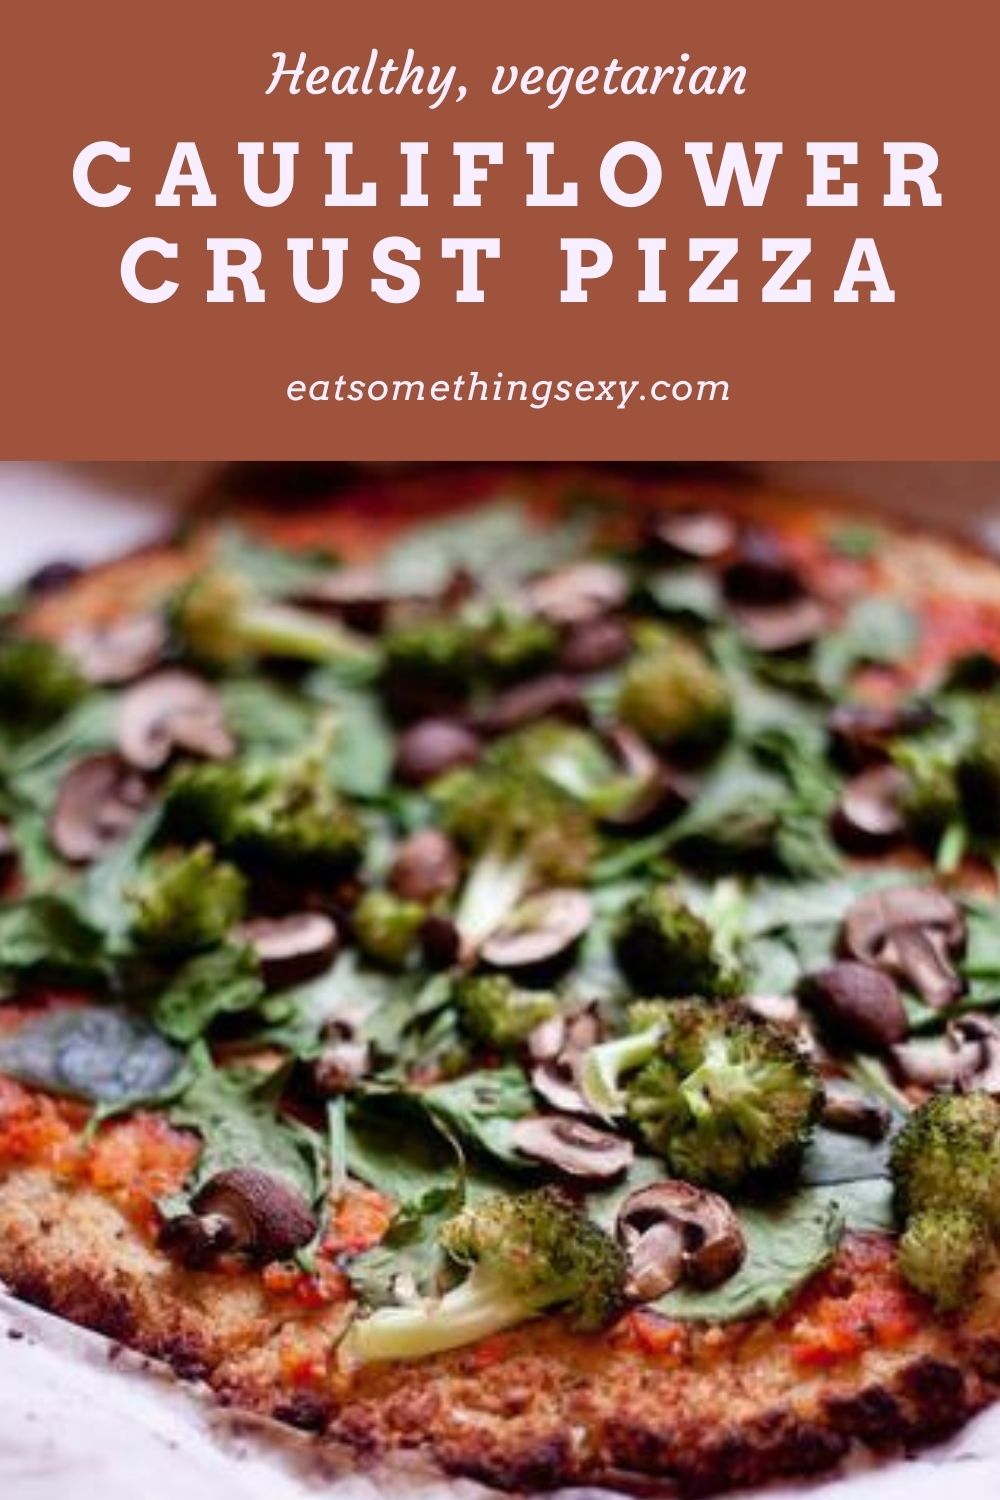 vegetarian pizza with cauliflower crust graphic